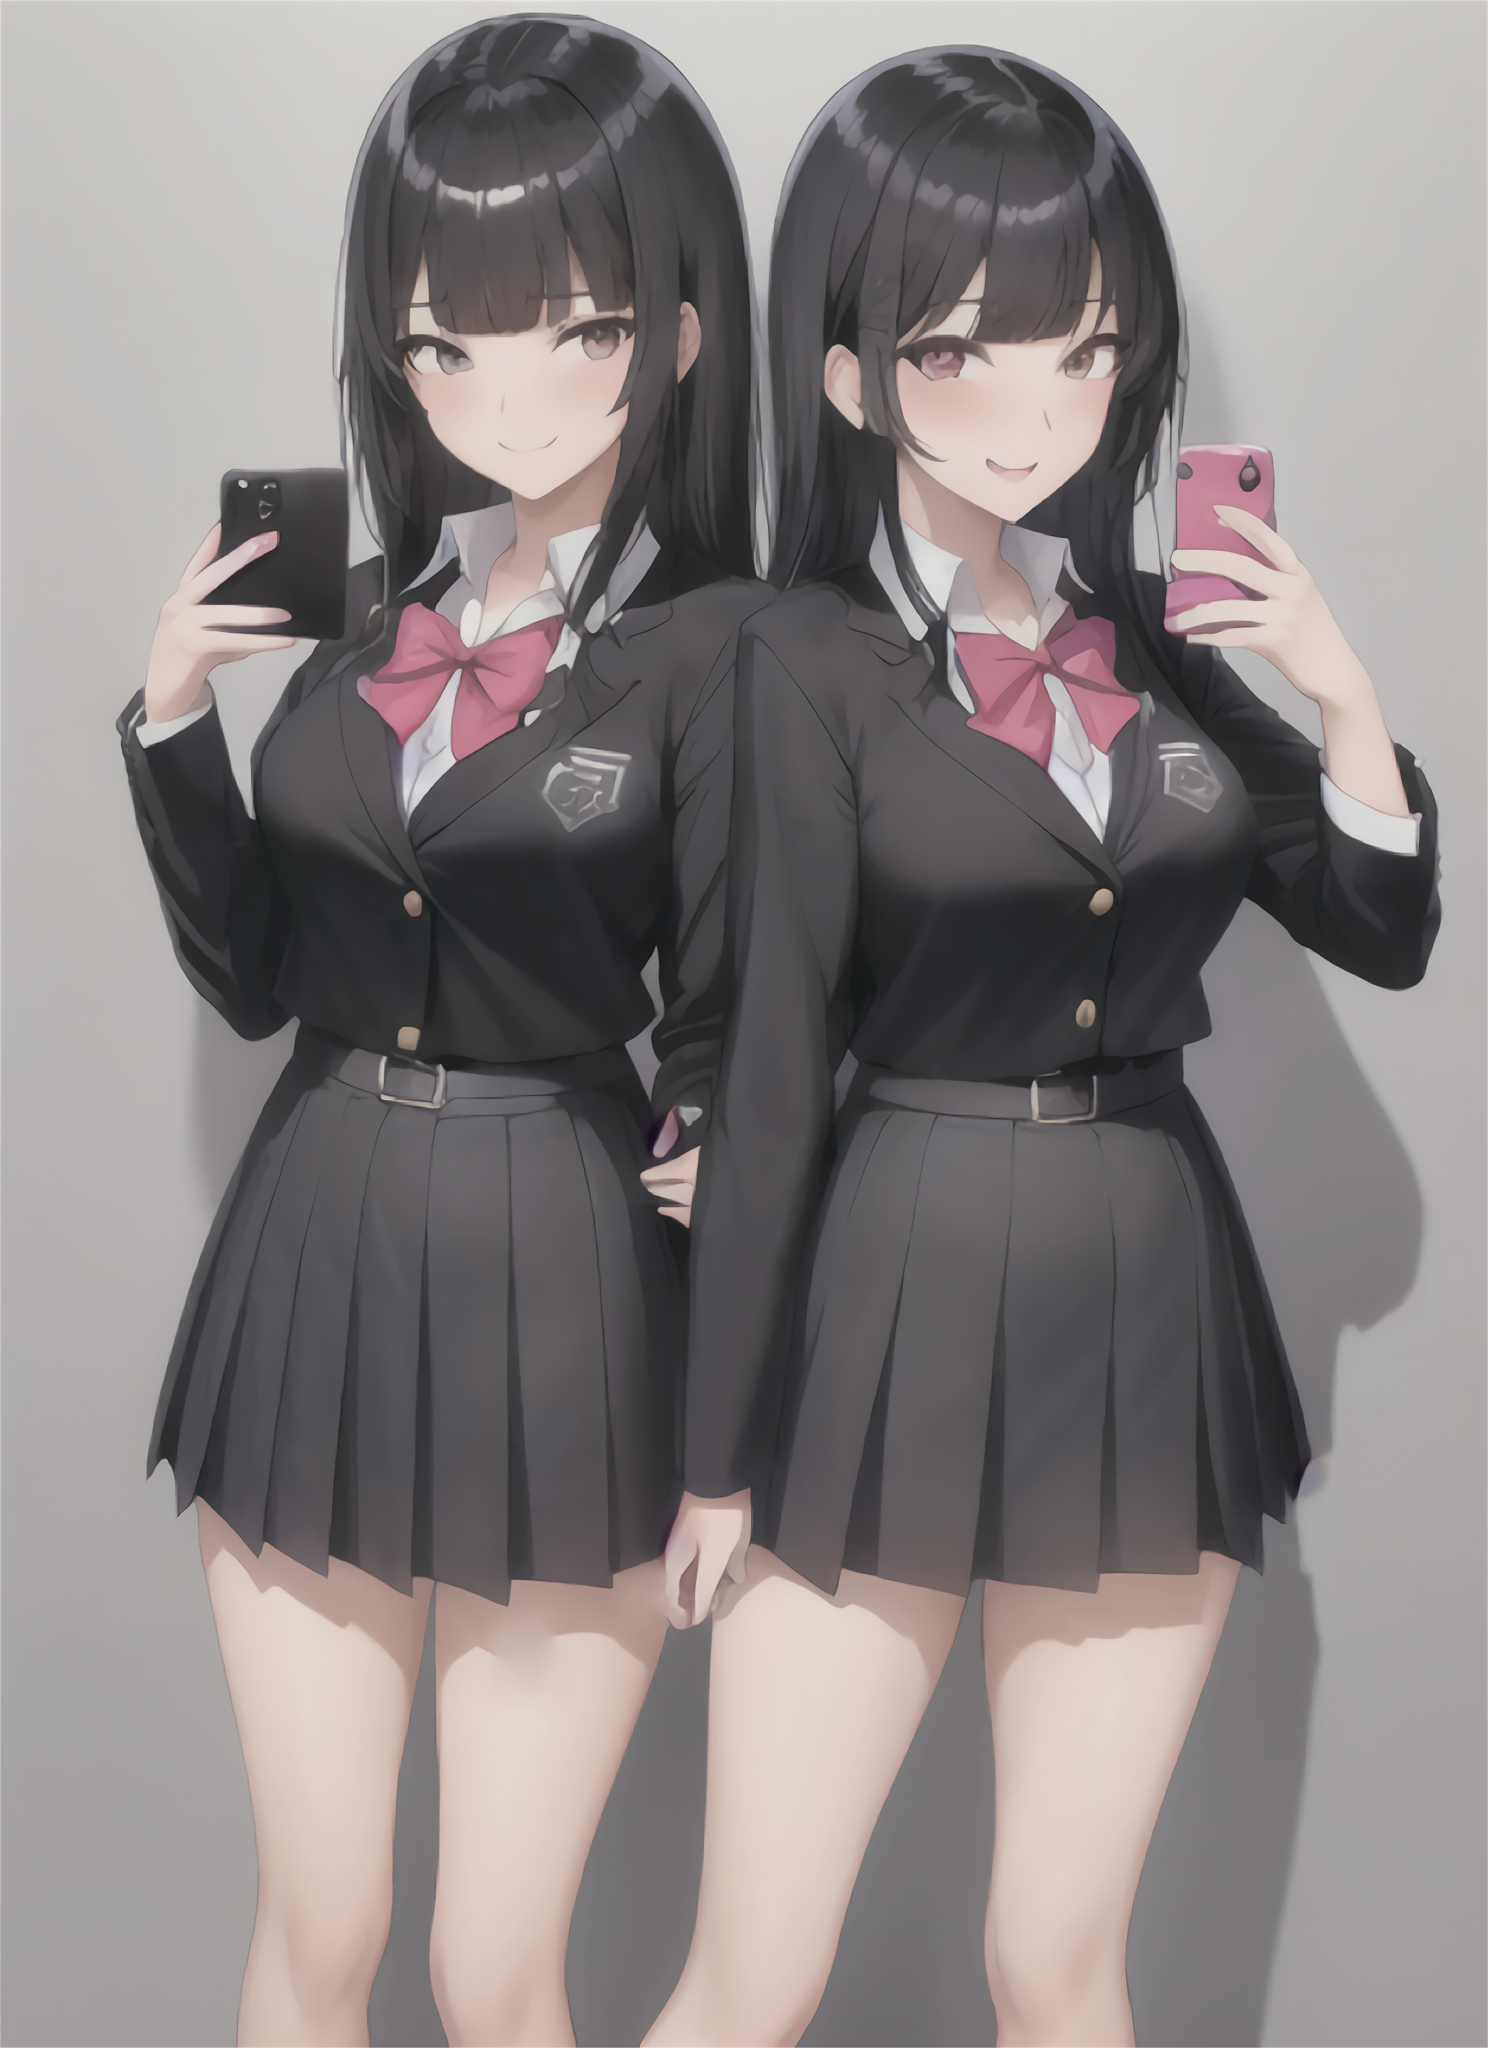 Anime 1488x2048 anime anime girls AI art schoolgirl school uniform solo long hair black hair two women twins original characters artwork digital art